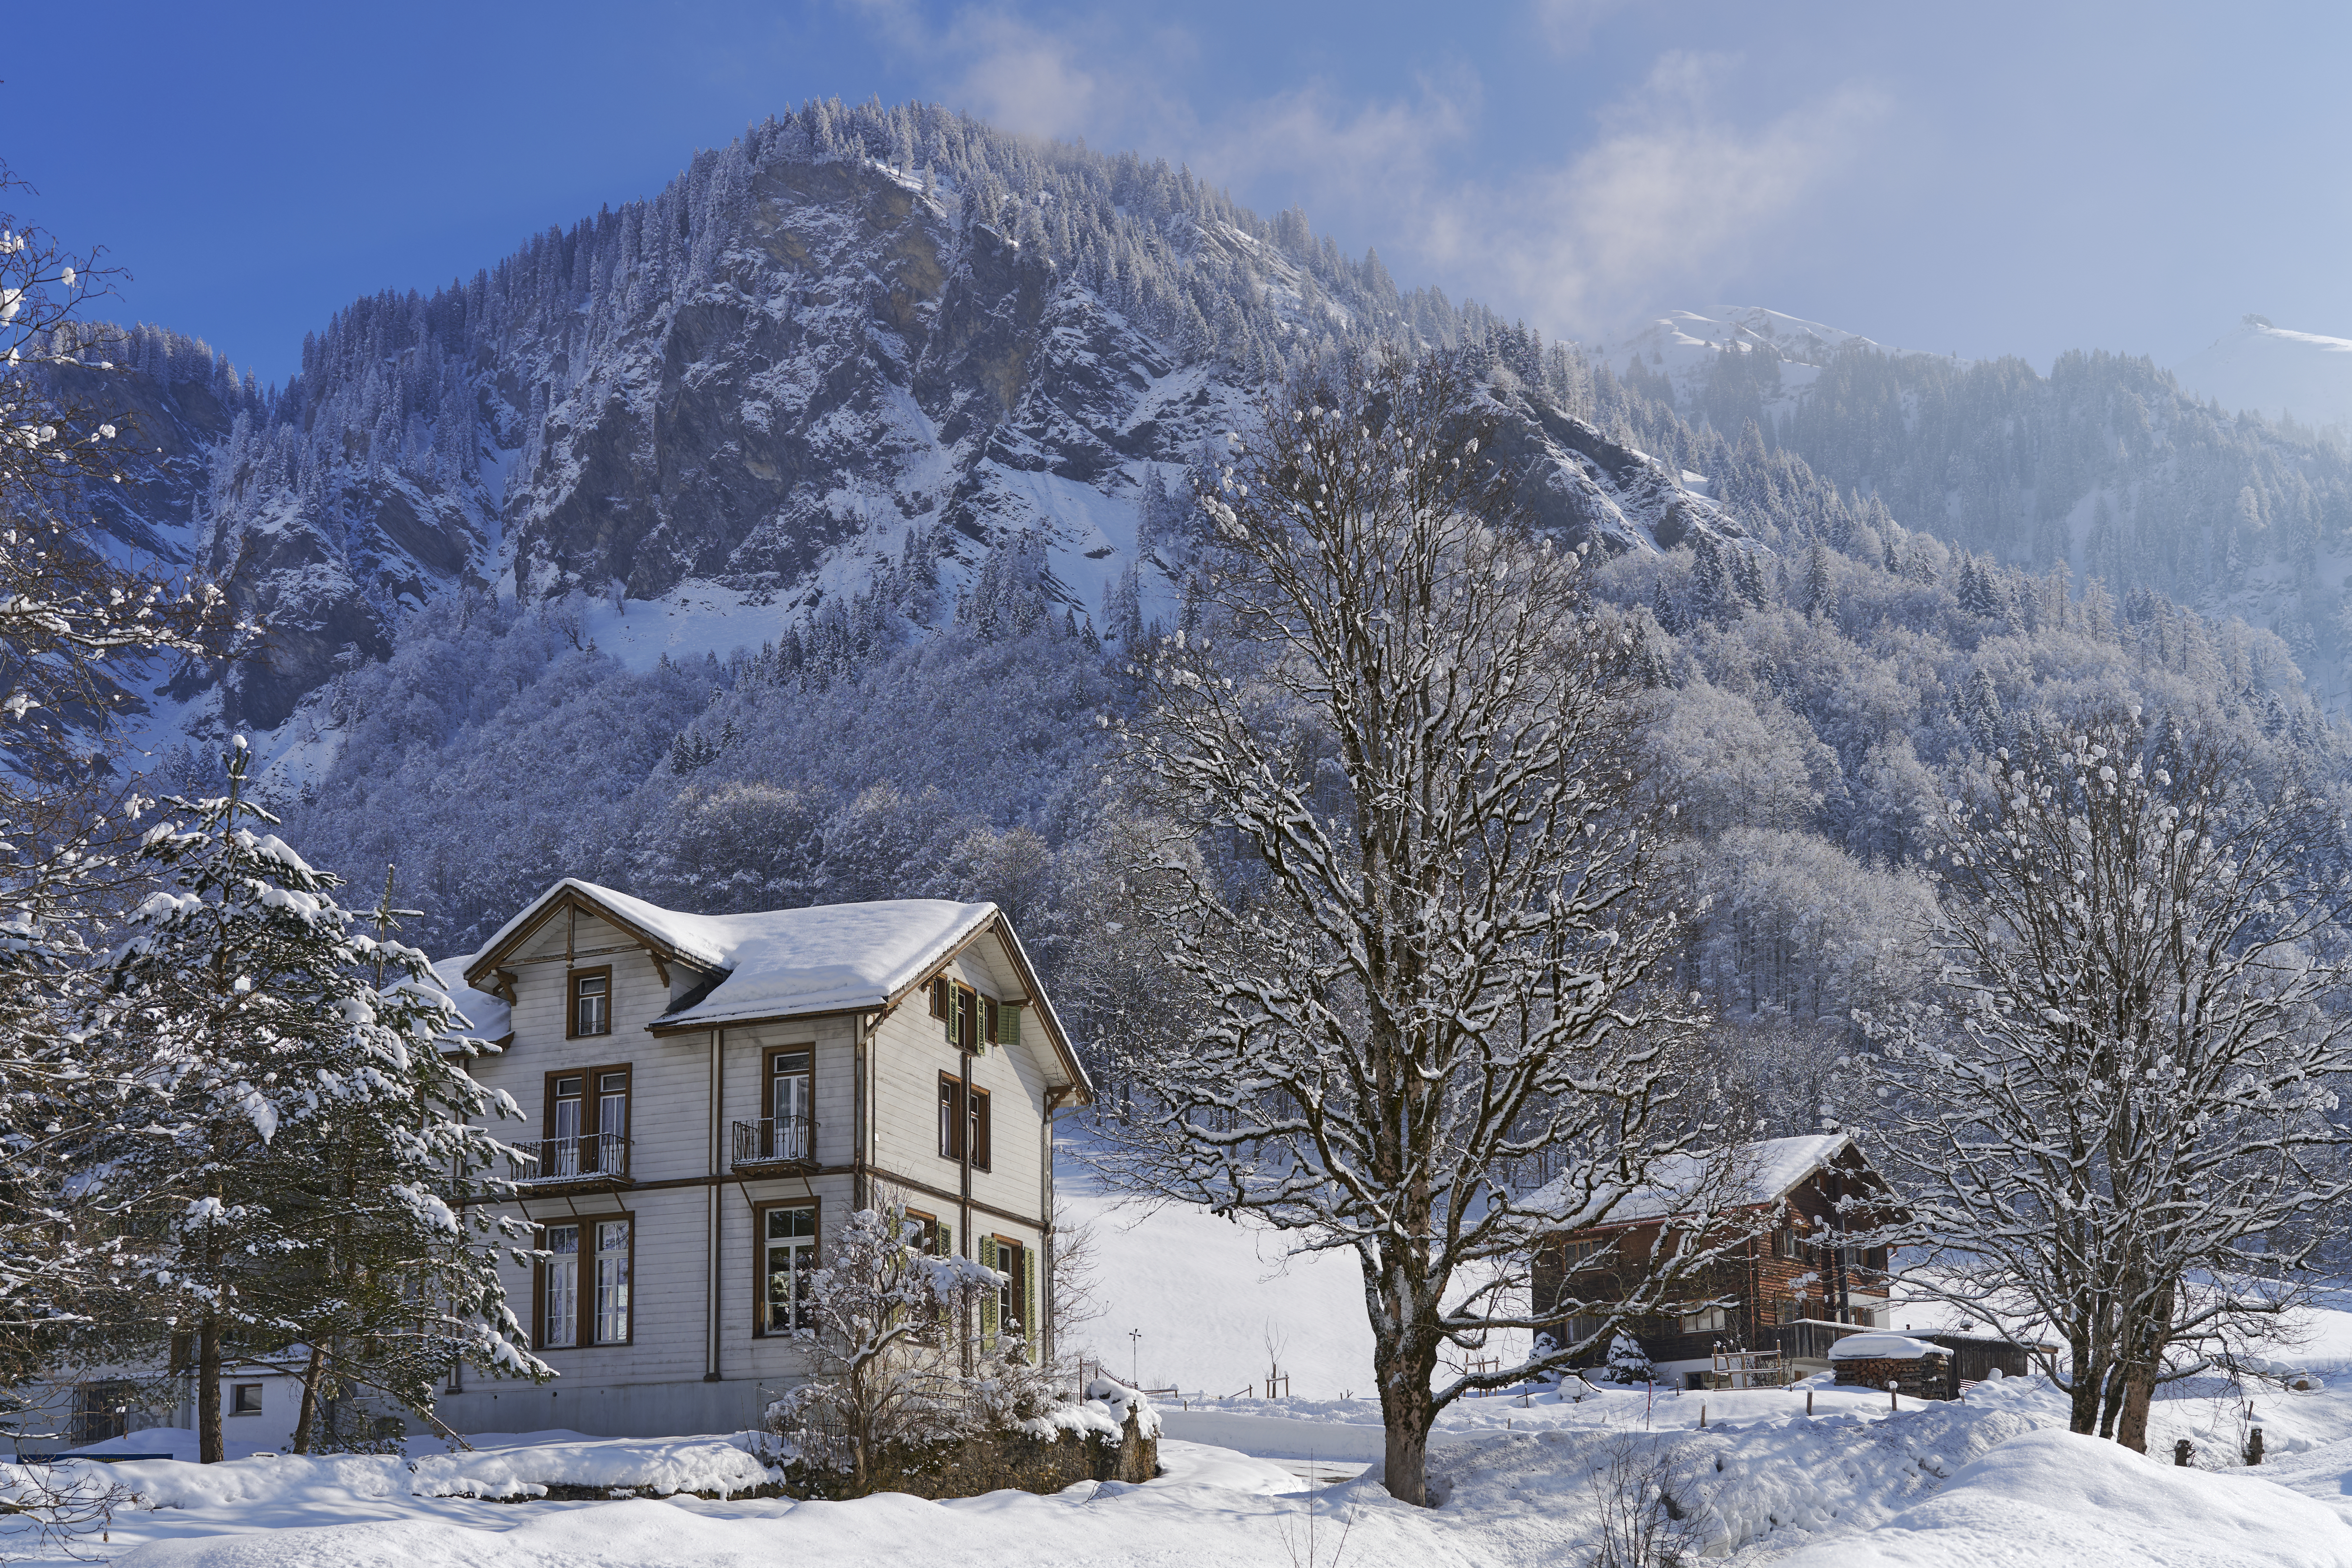  L'hôtel Alpenhof dans la vallée de Weisstannen 